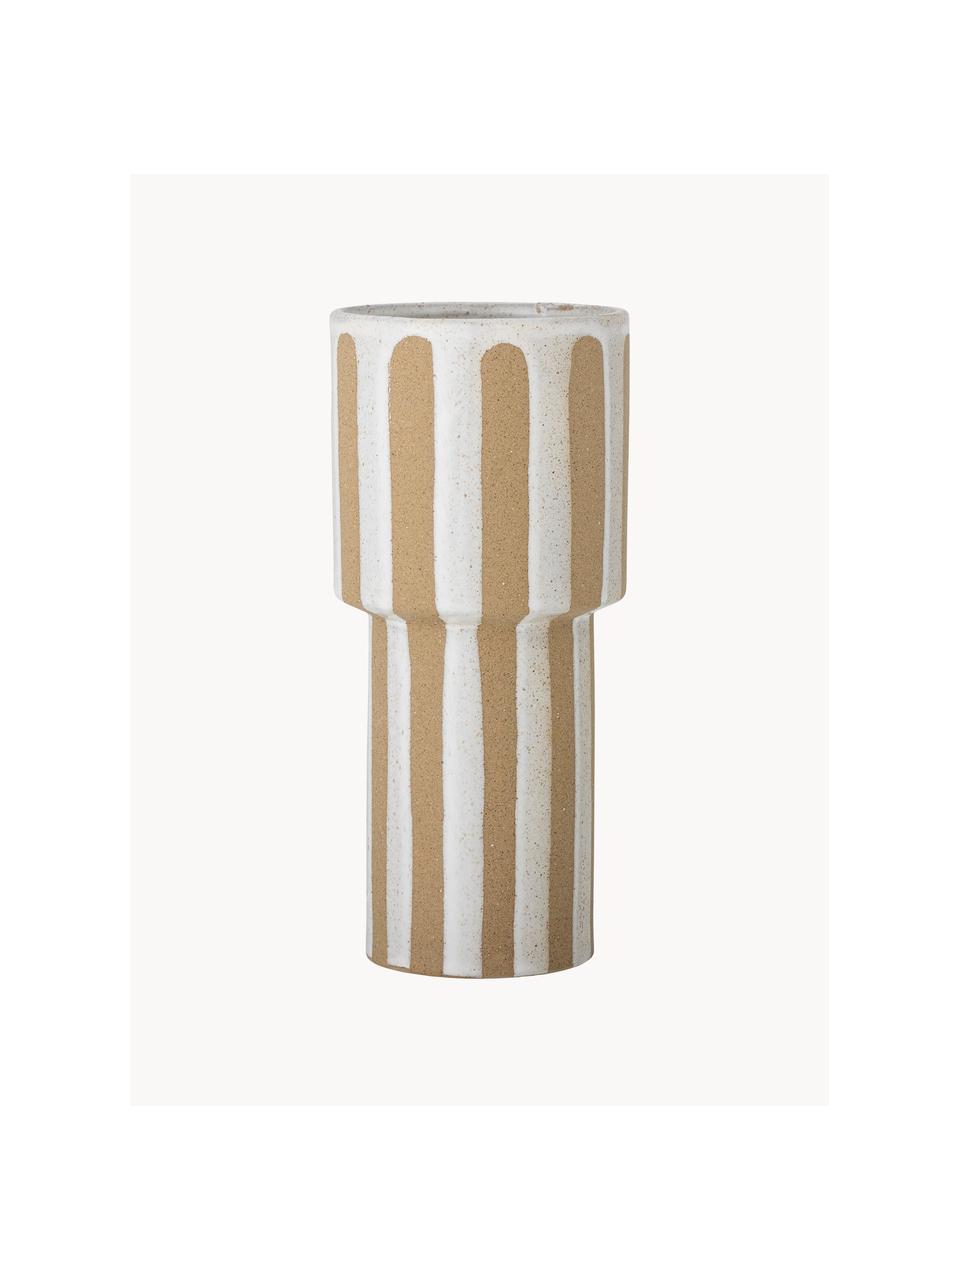 Vase artisanal Awah, Grès cérame, Beige, blanc, Ø 13 x haut. 29 cm